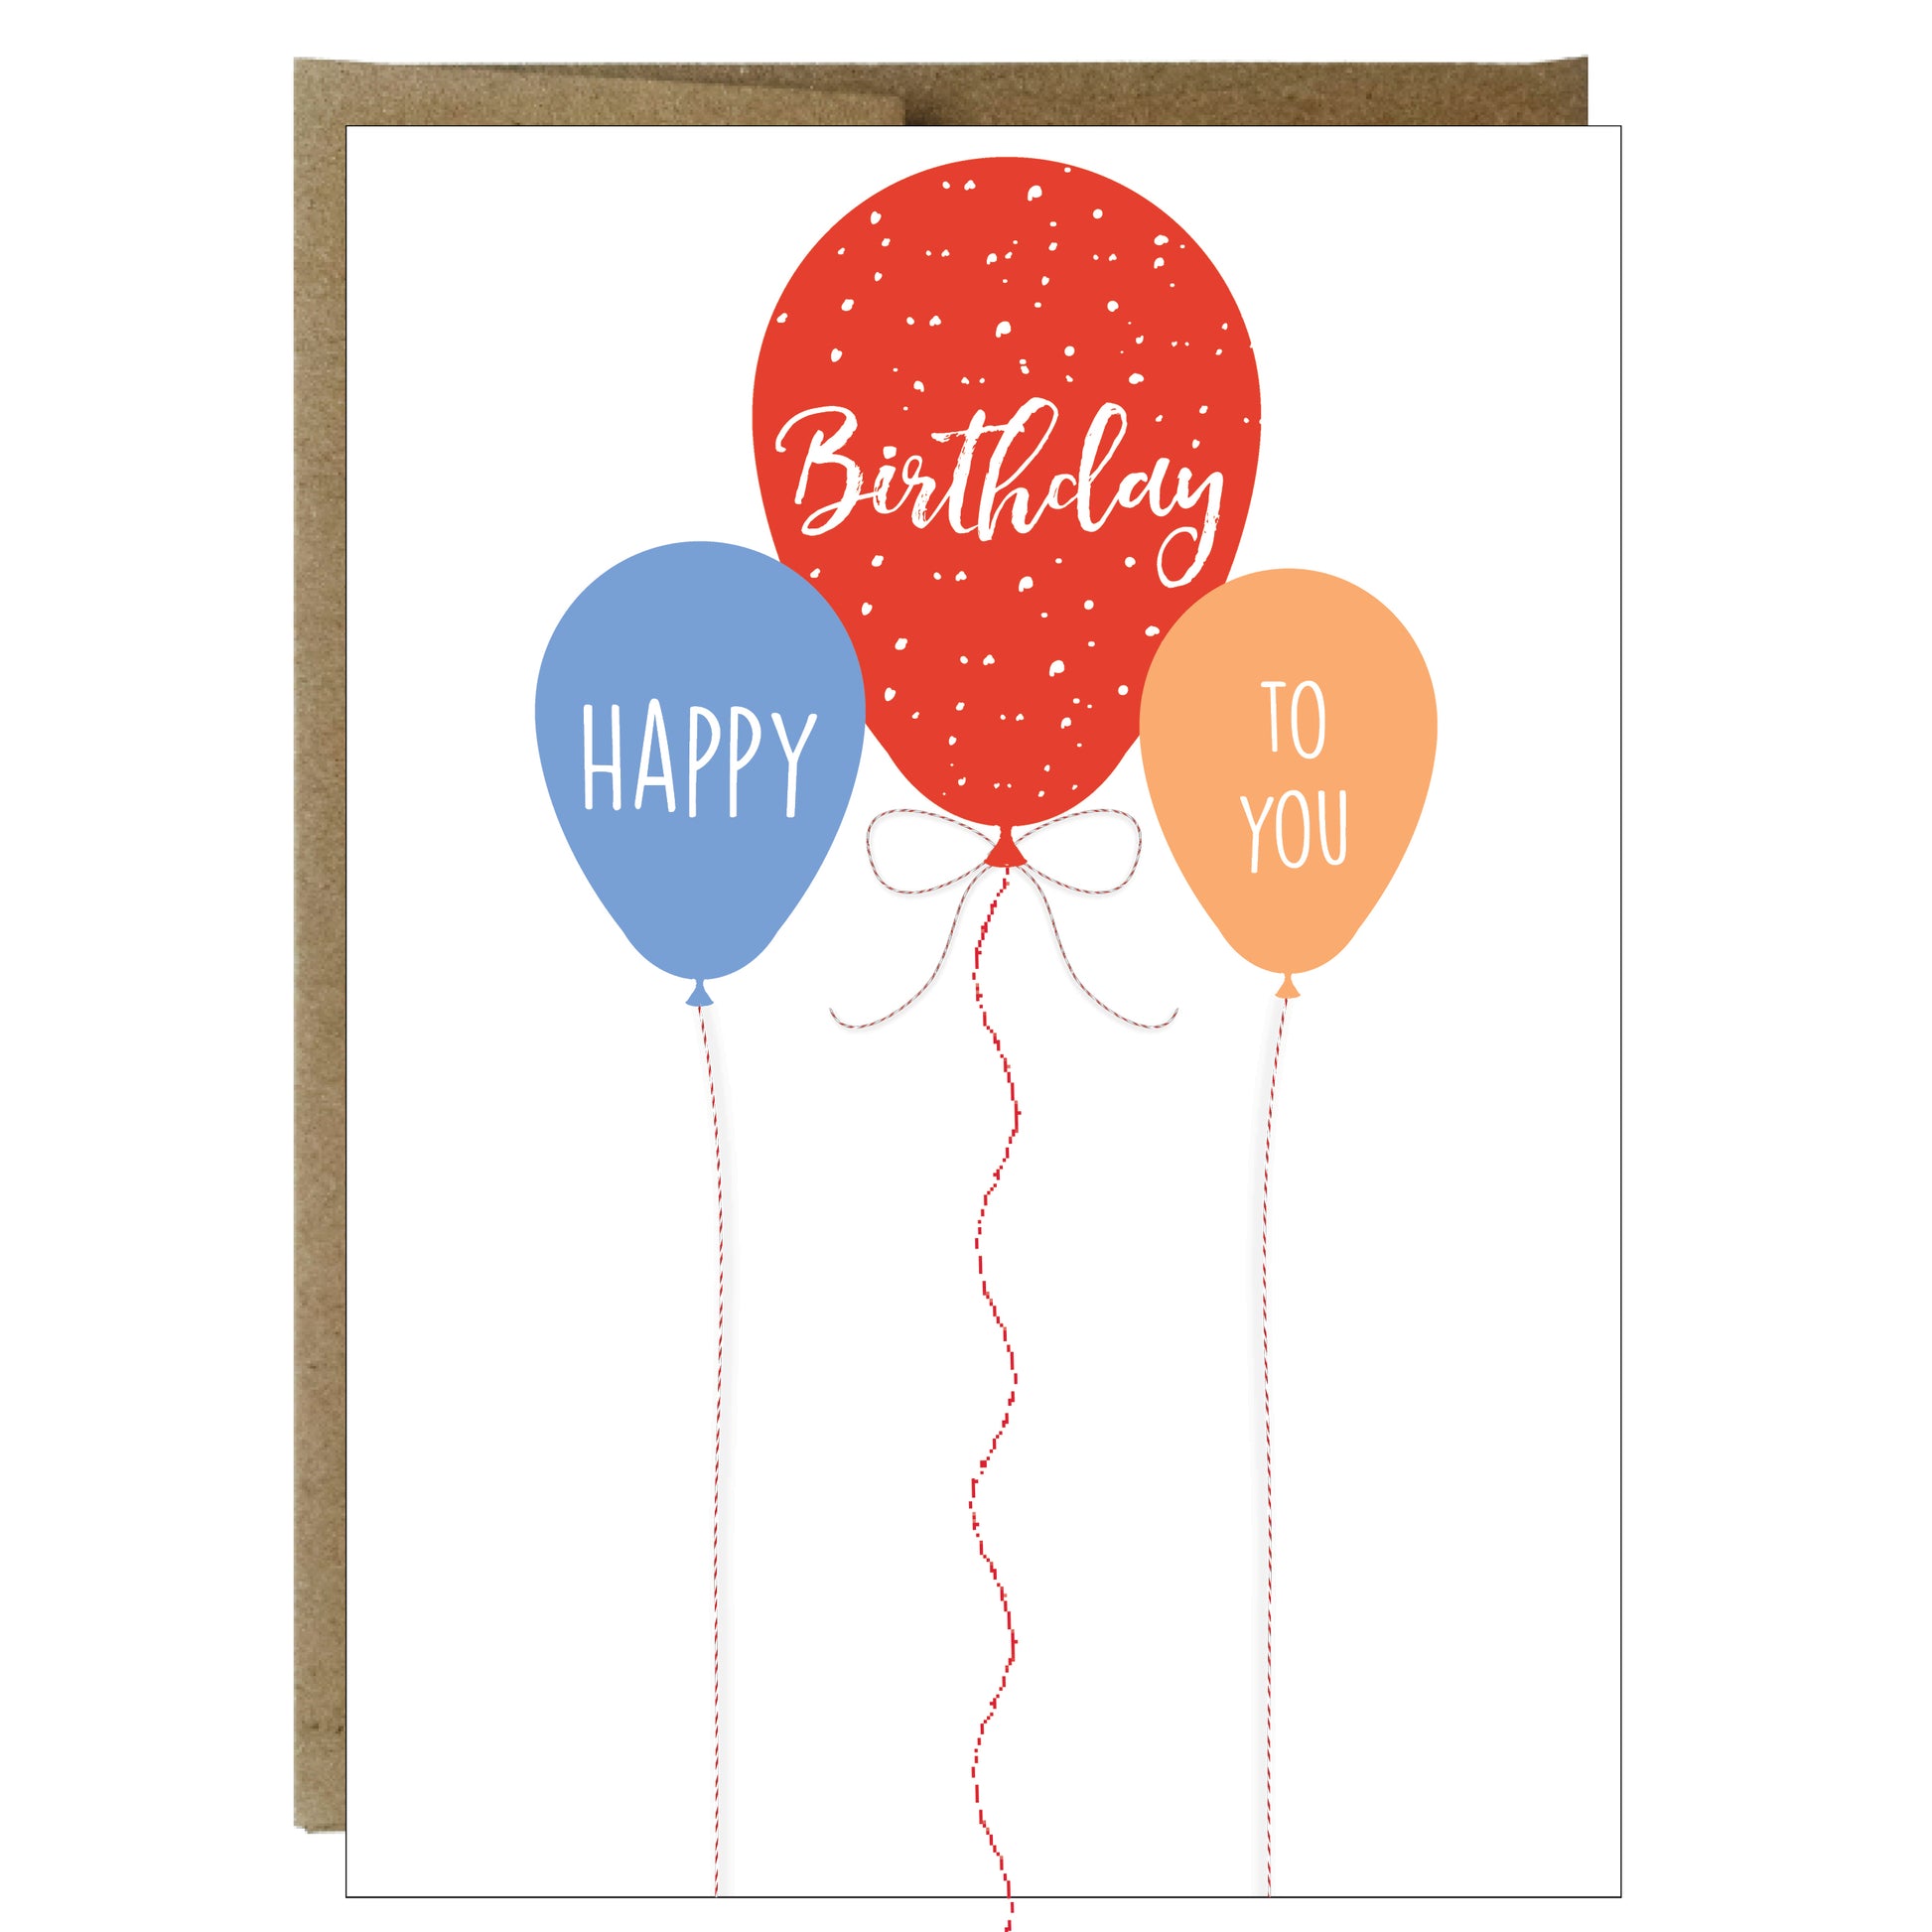 Happy Birthday Balloons Card with sewn paper - Idea Chíc